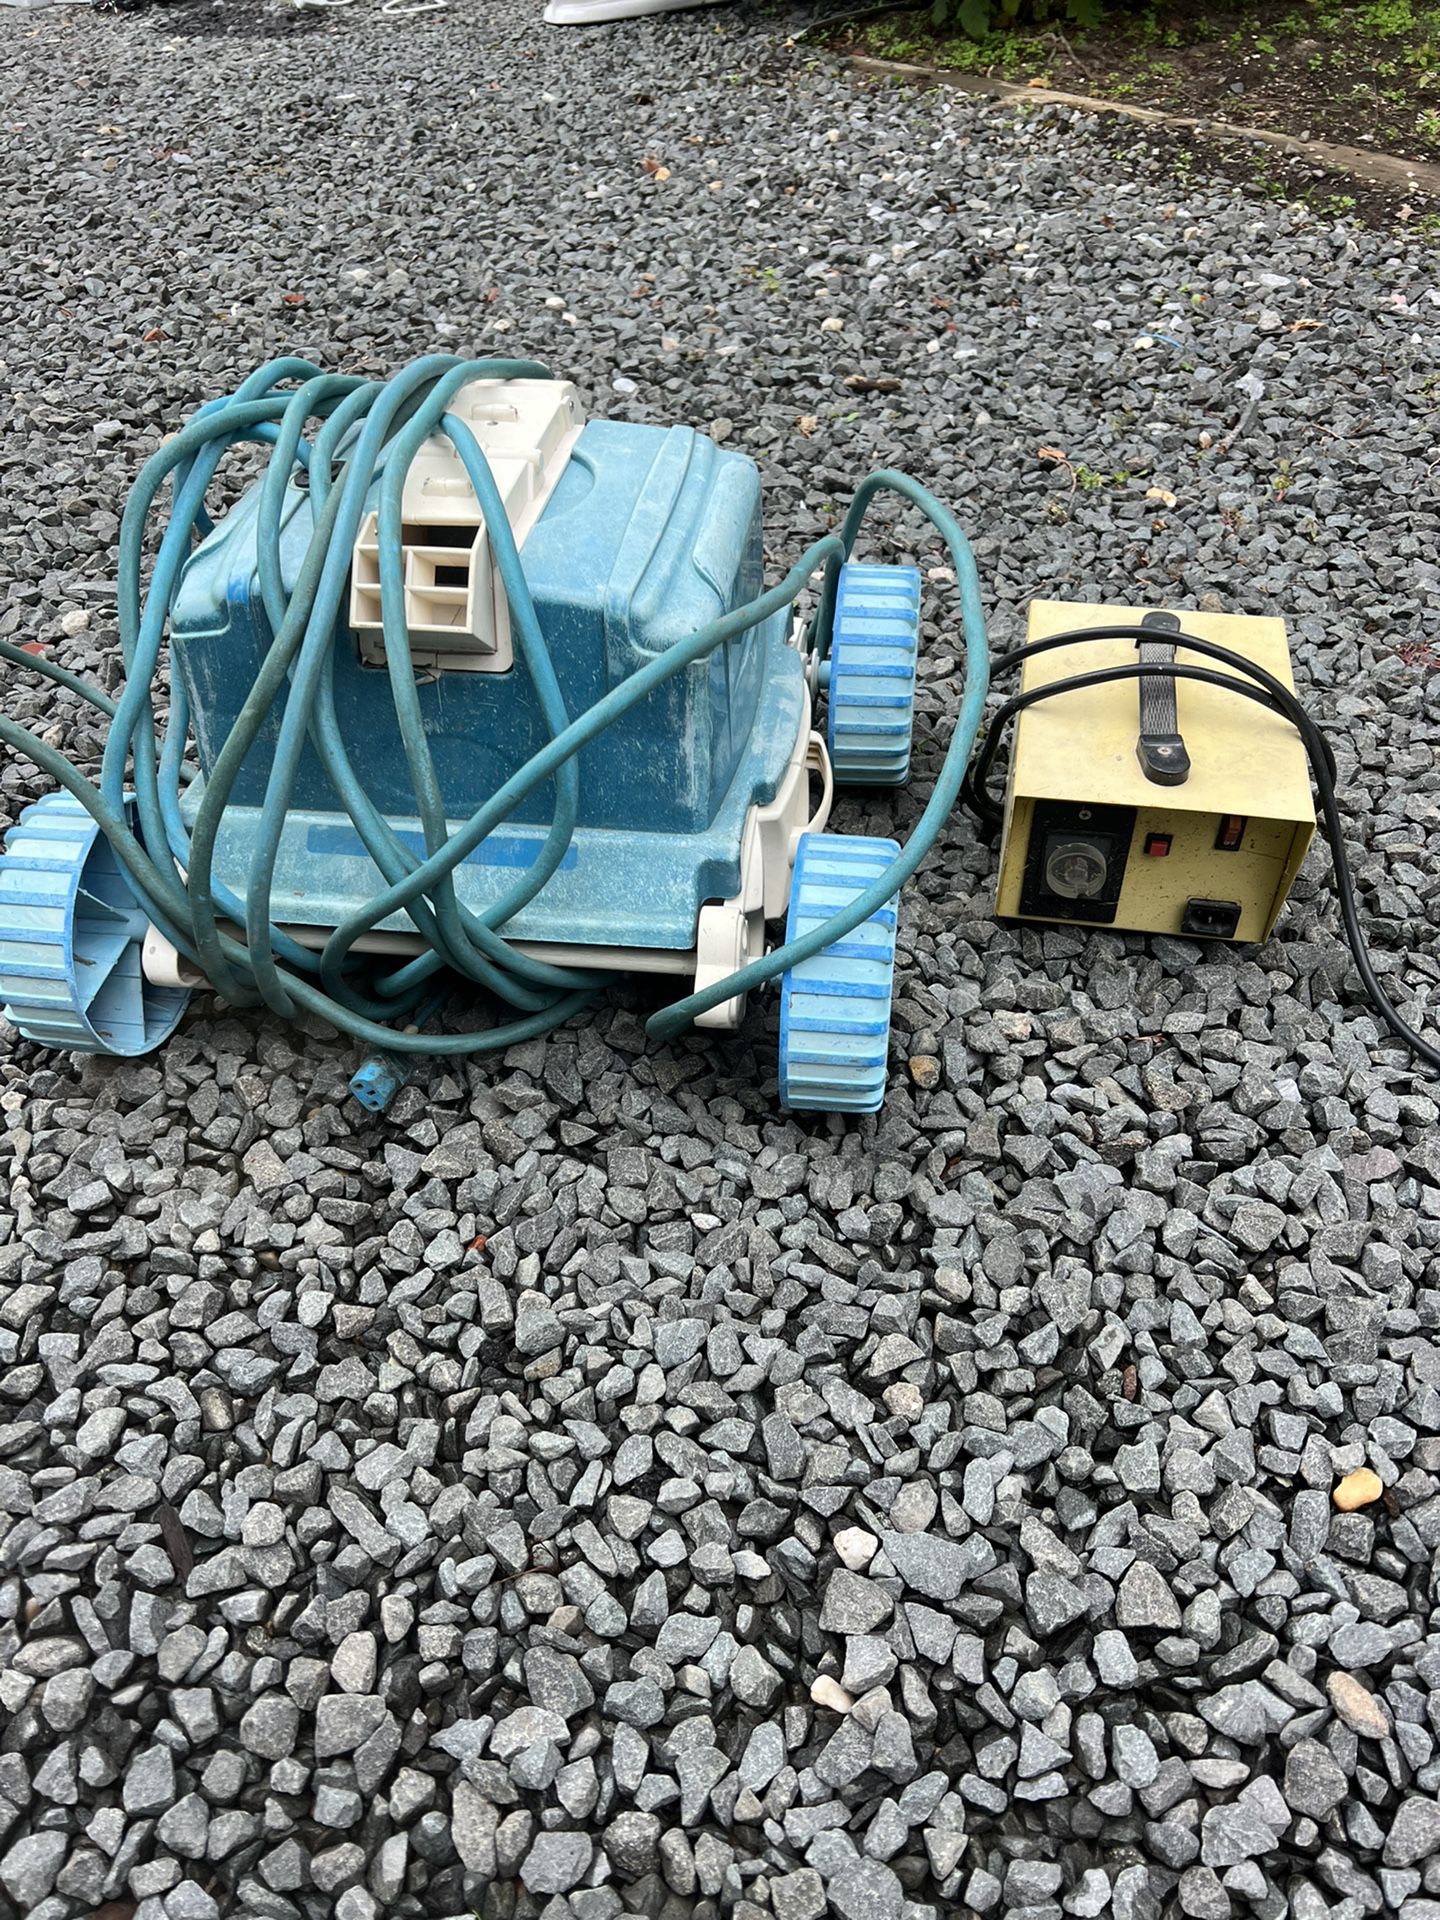 Swimming Pool Robot-vacuum